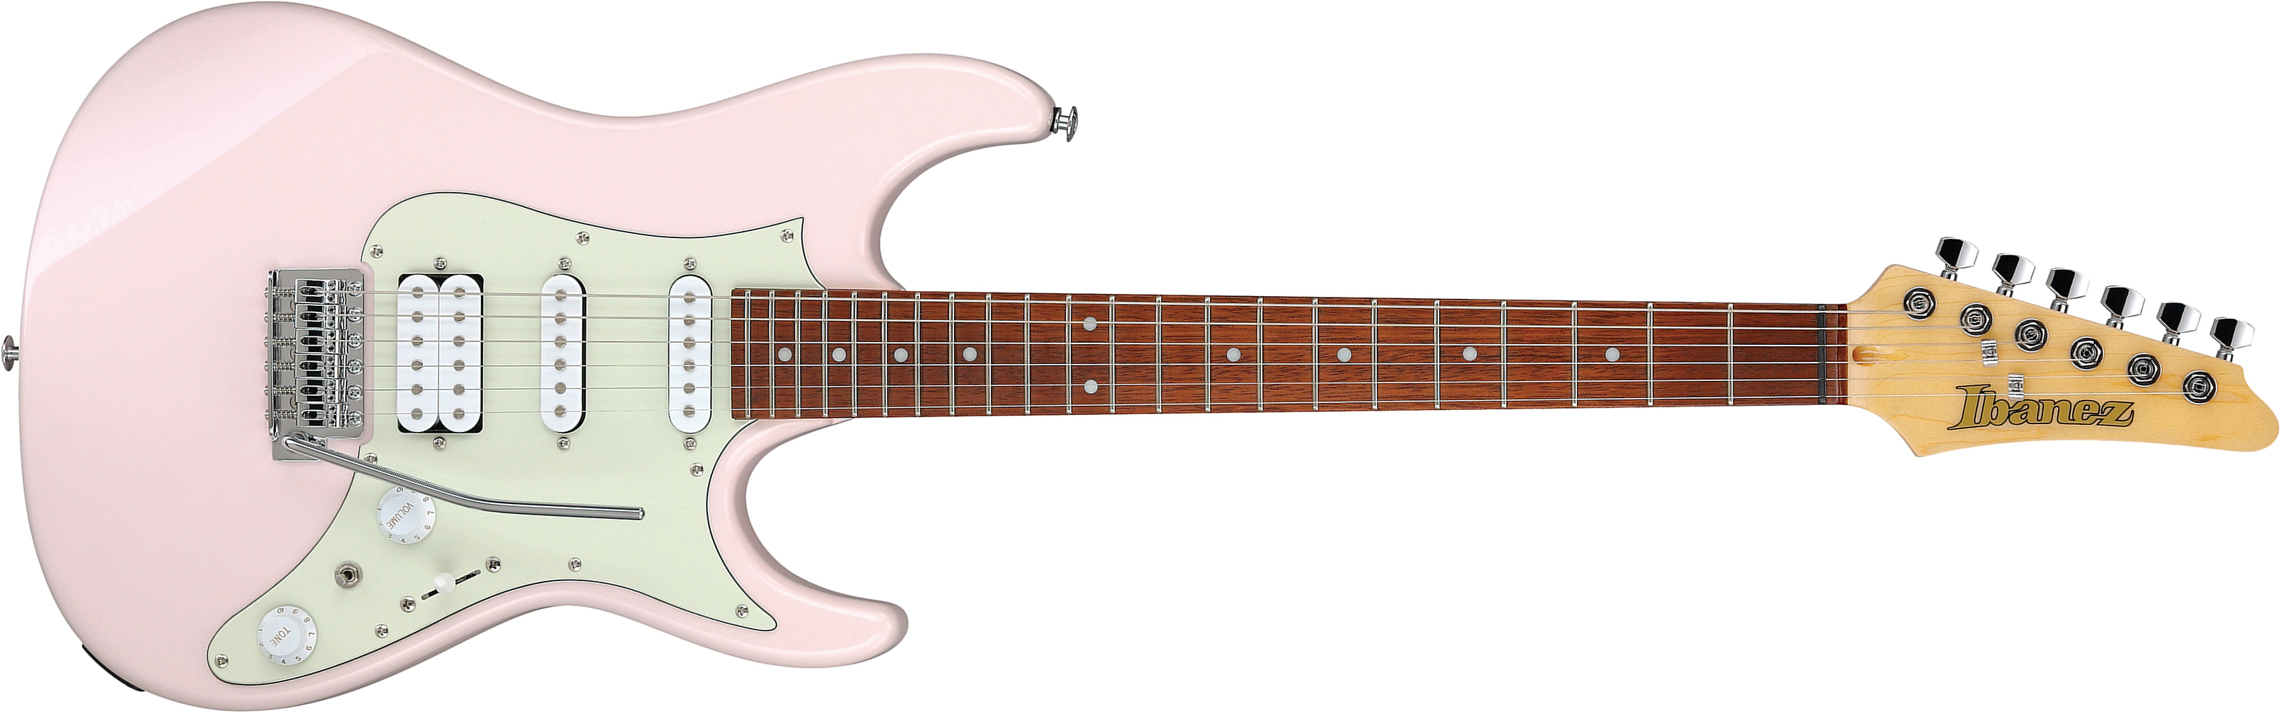 Ibanez Azes40 Ppk Standard Hss Trem Jat - Pastel Pink - Str shape electric guitar - Main picture